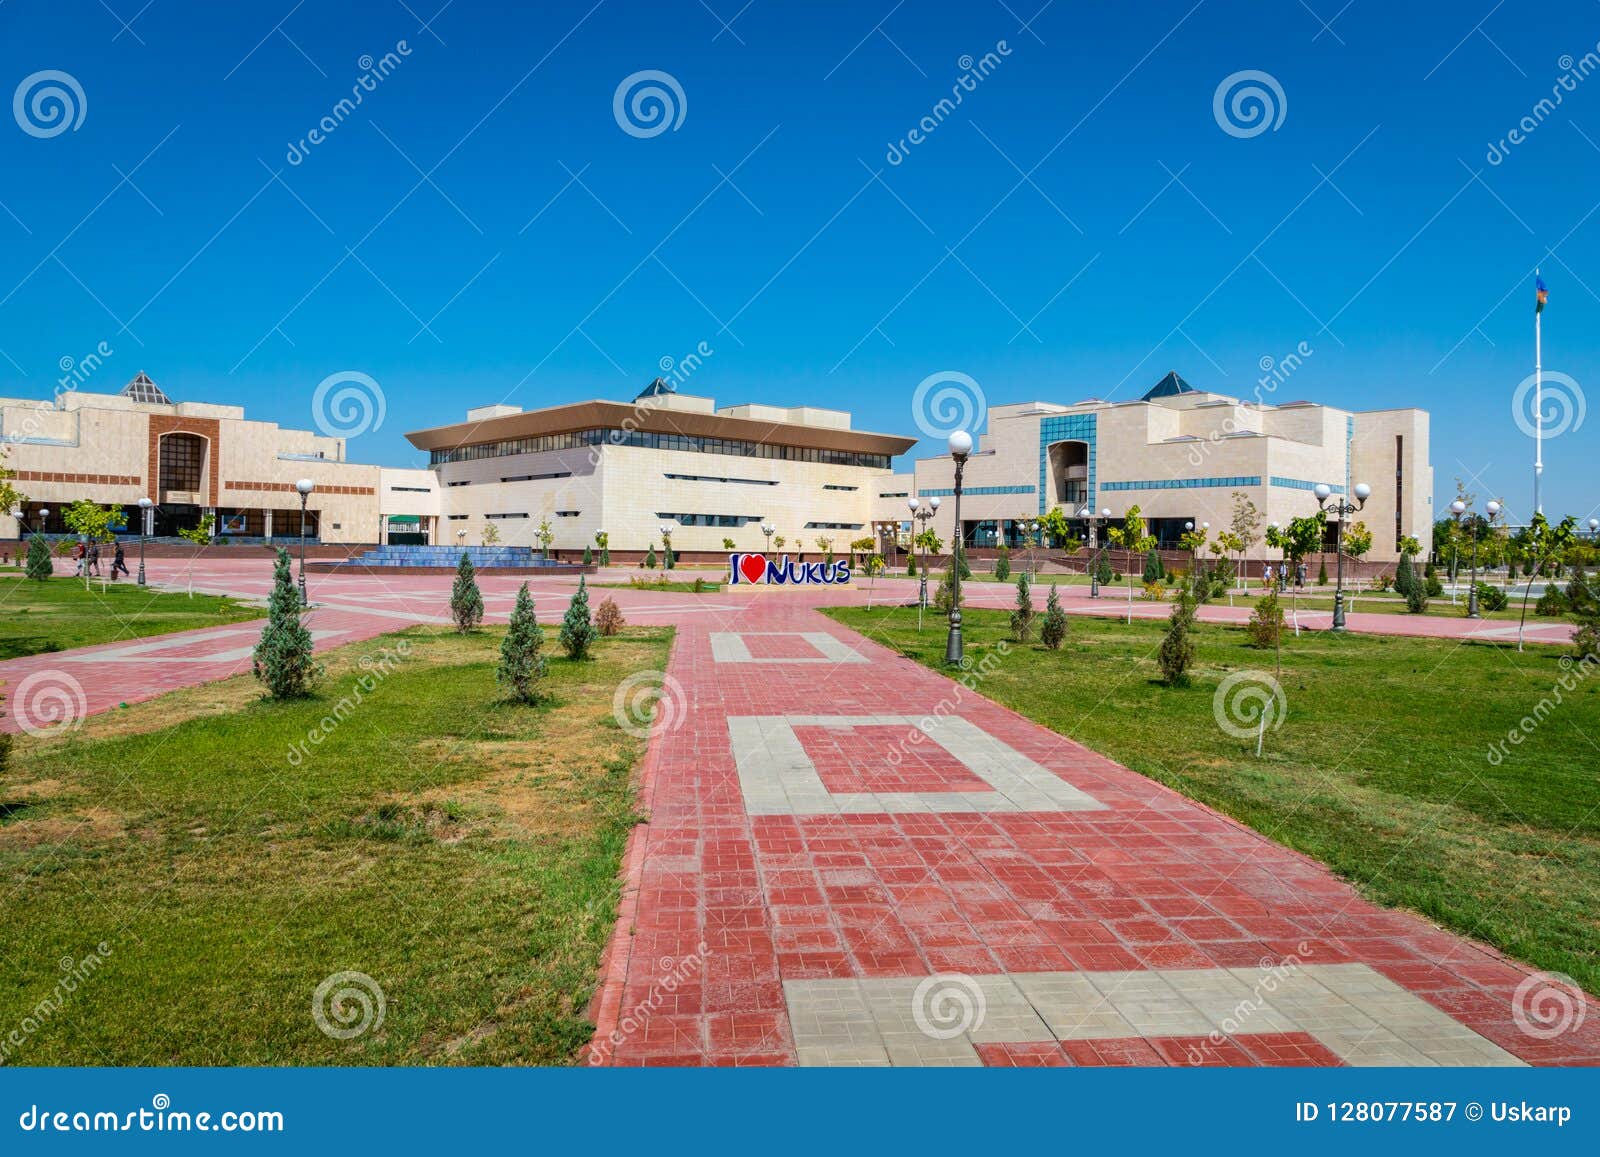 Nukus Uzbekistan - September 2018: Nukus stadsfyrkant framme av Karakalpakmuseet av den sovjetiska konstmusesumen för konster i Uzbekistan